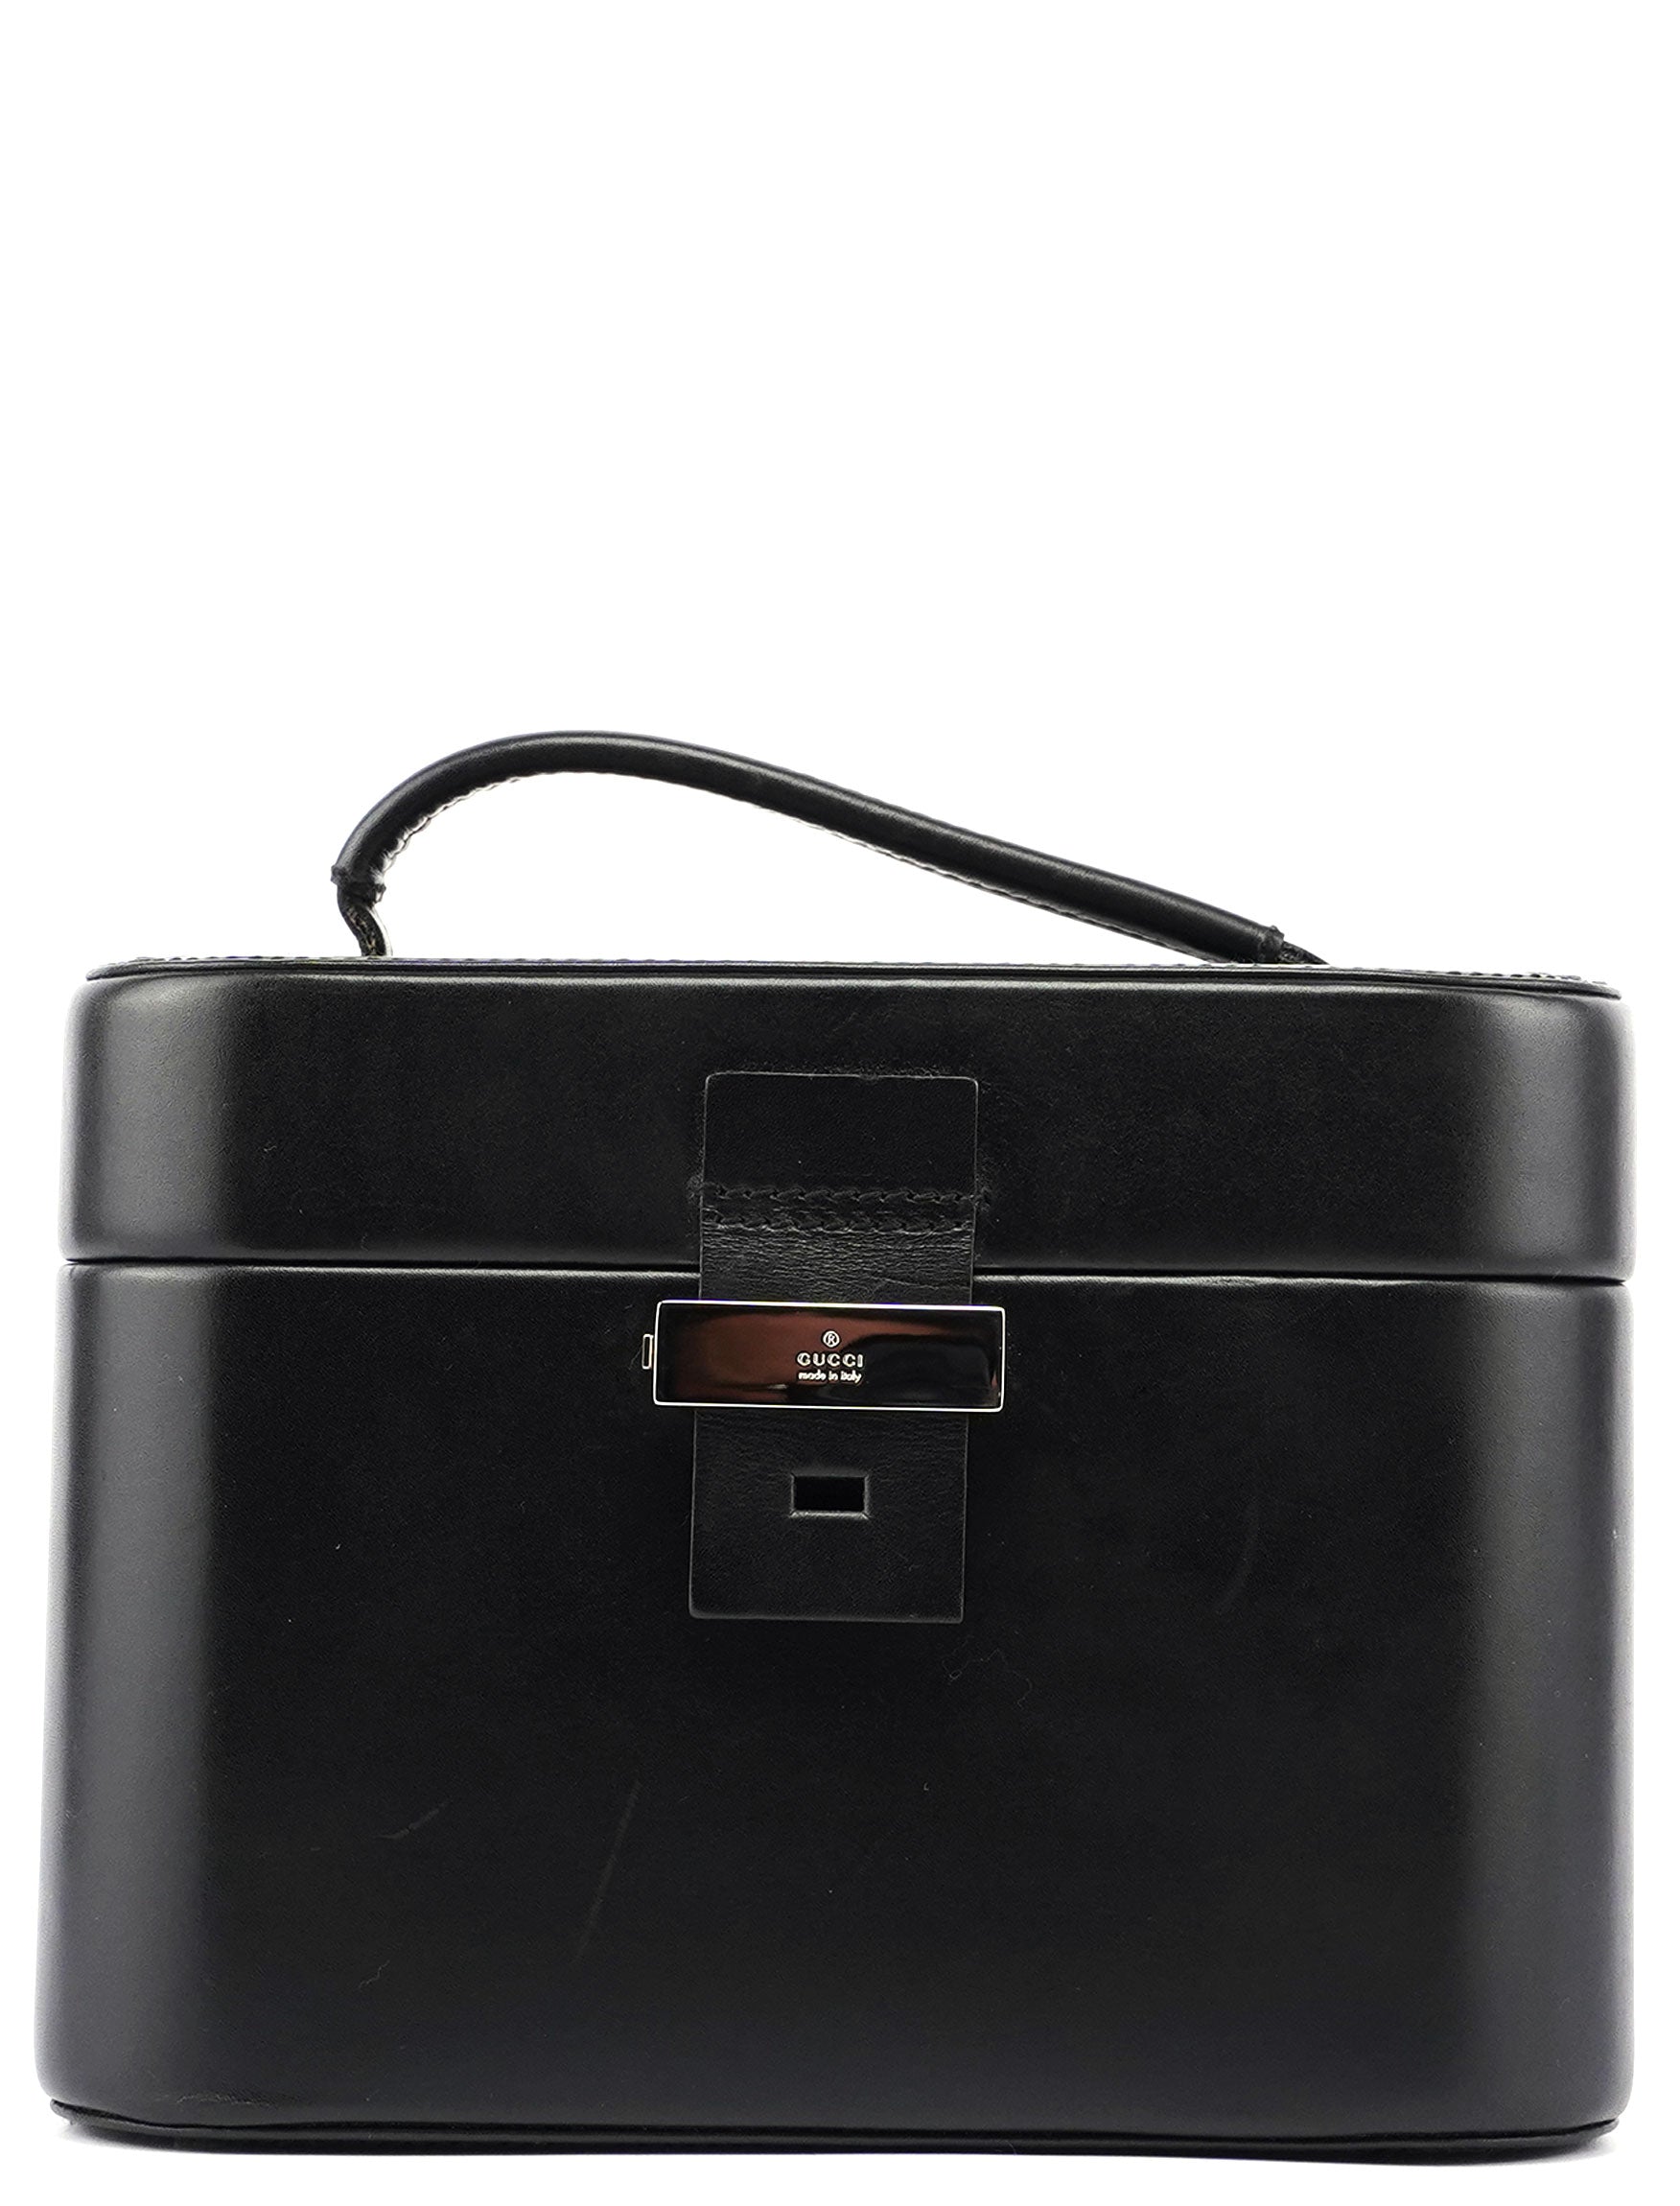 Gucci Black Calfskin Top Handle Bag